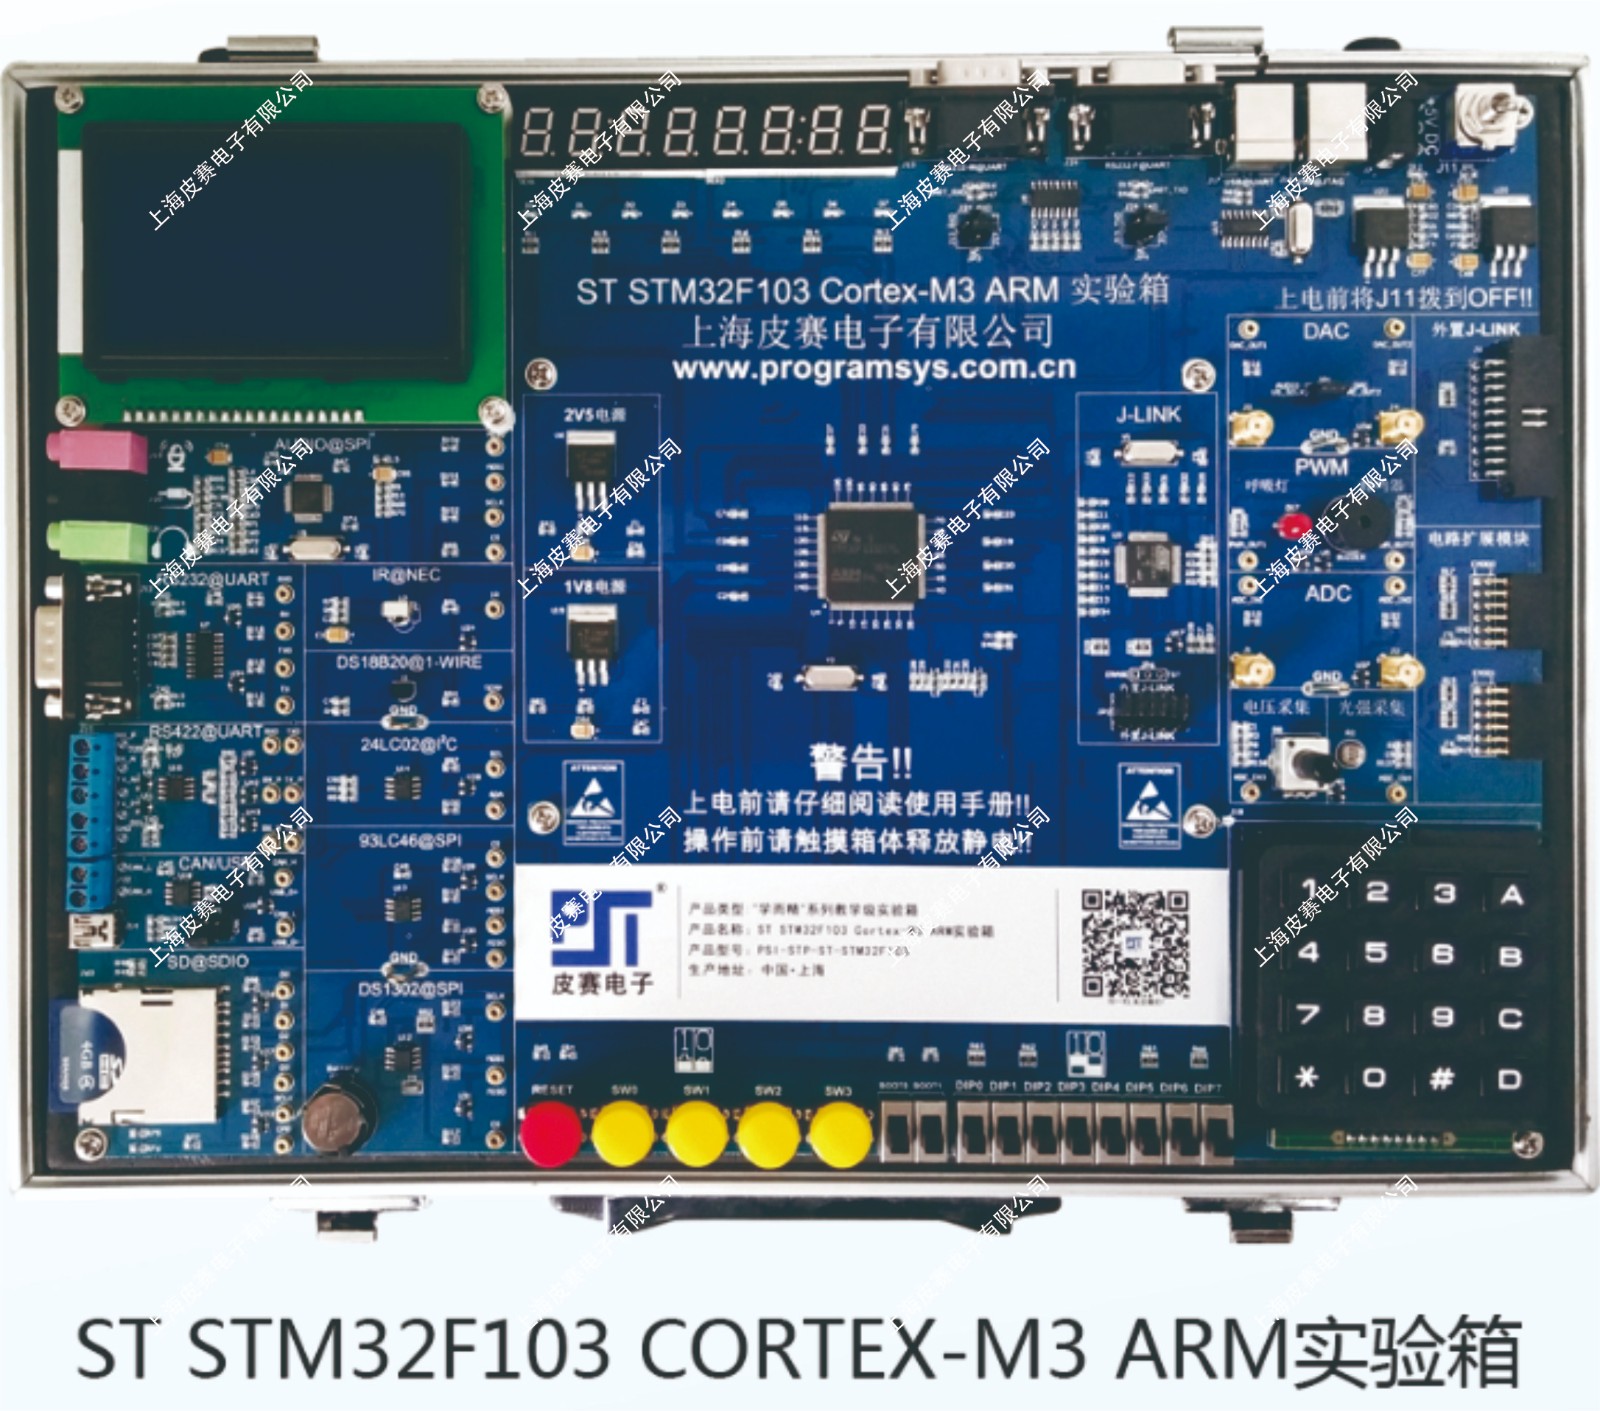 ST STM32F103 CORTEX-M3 ARM实验箱